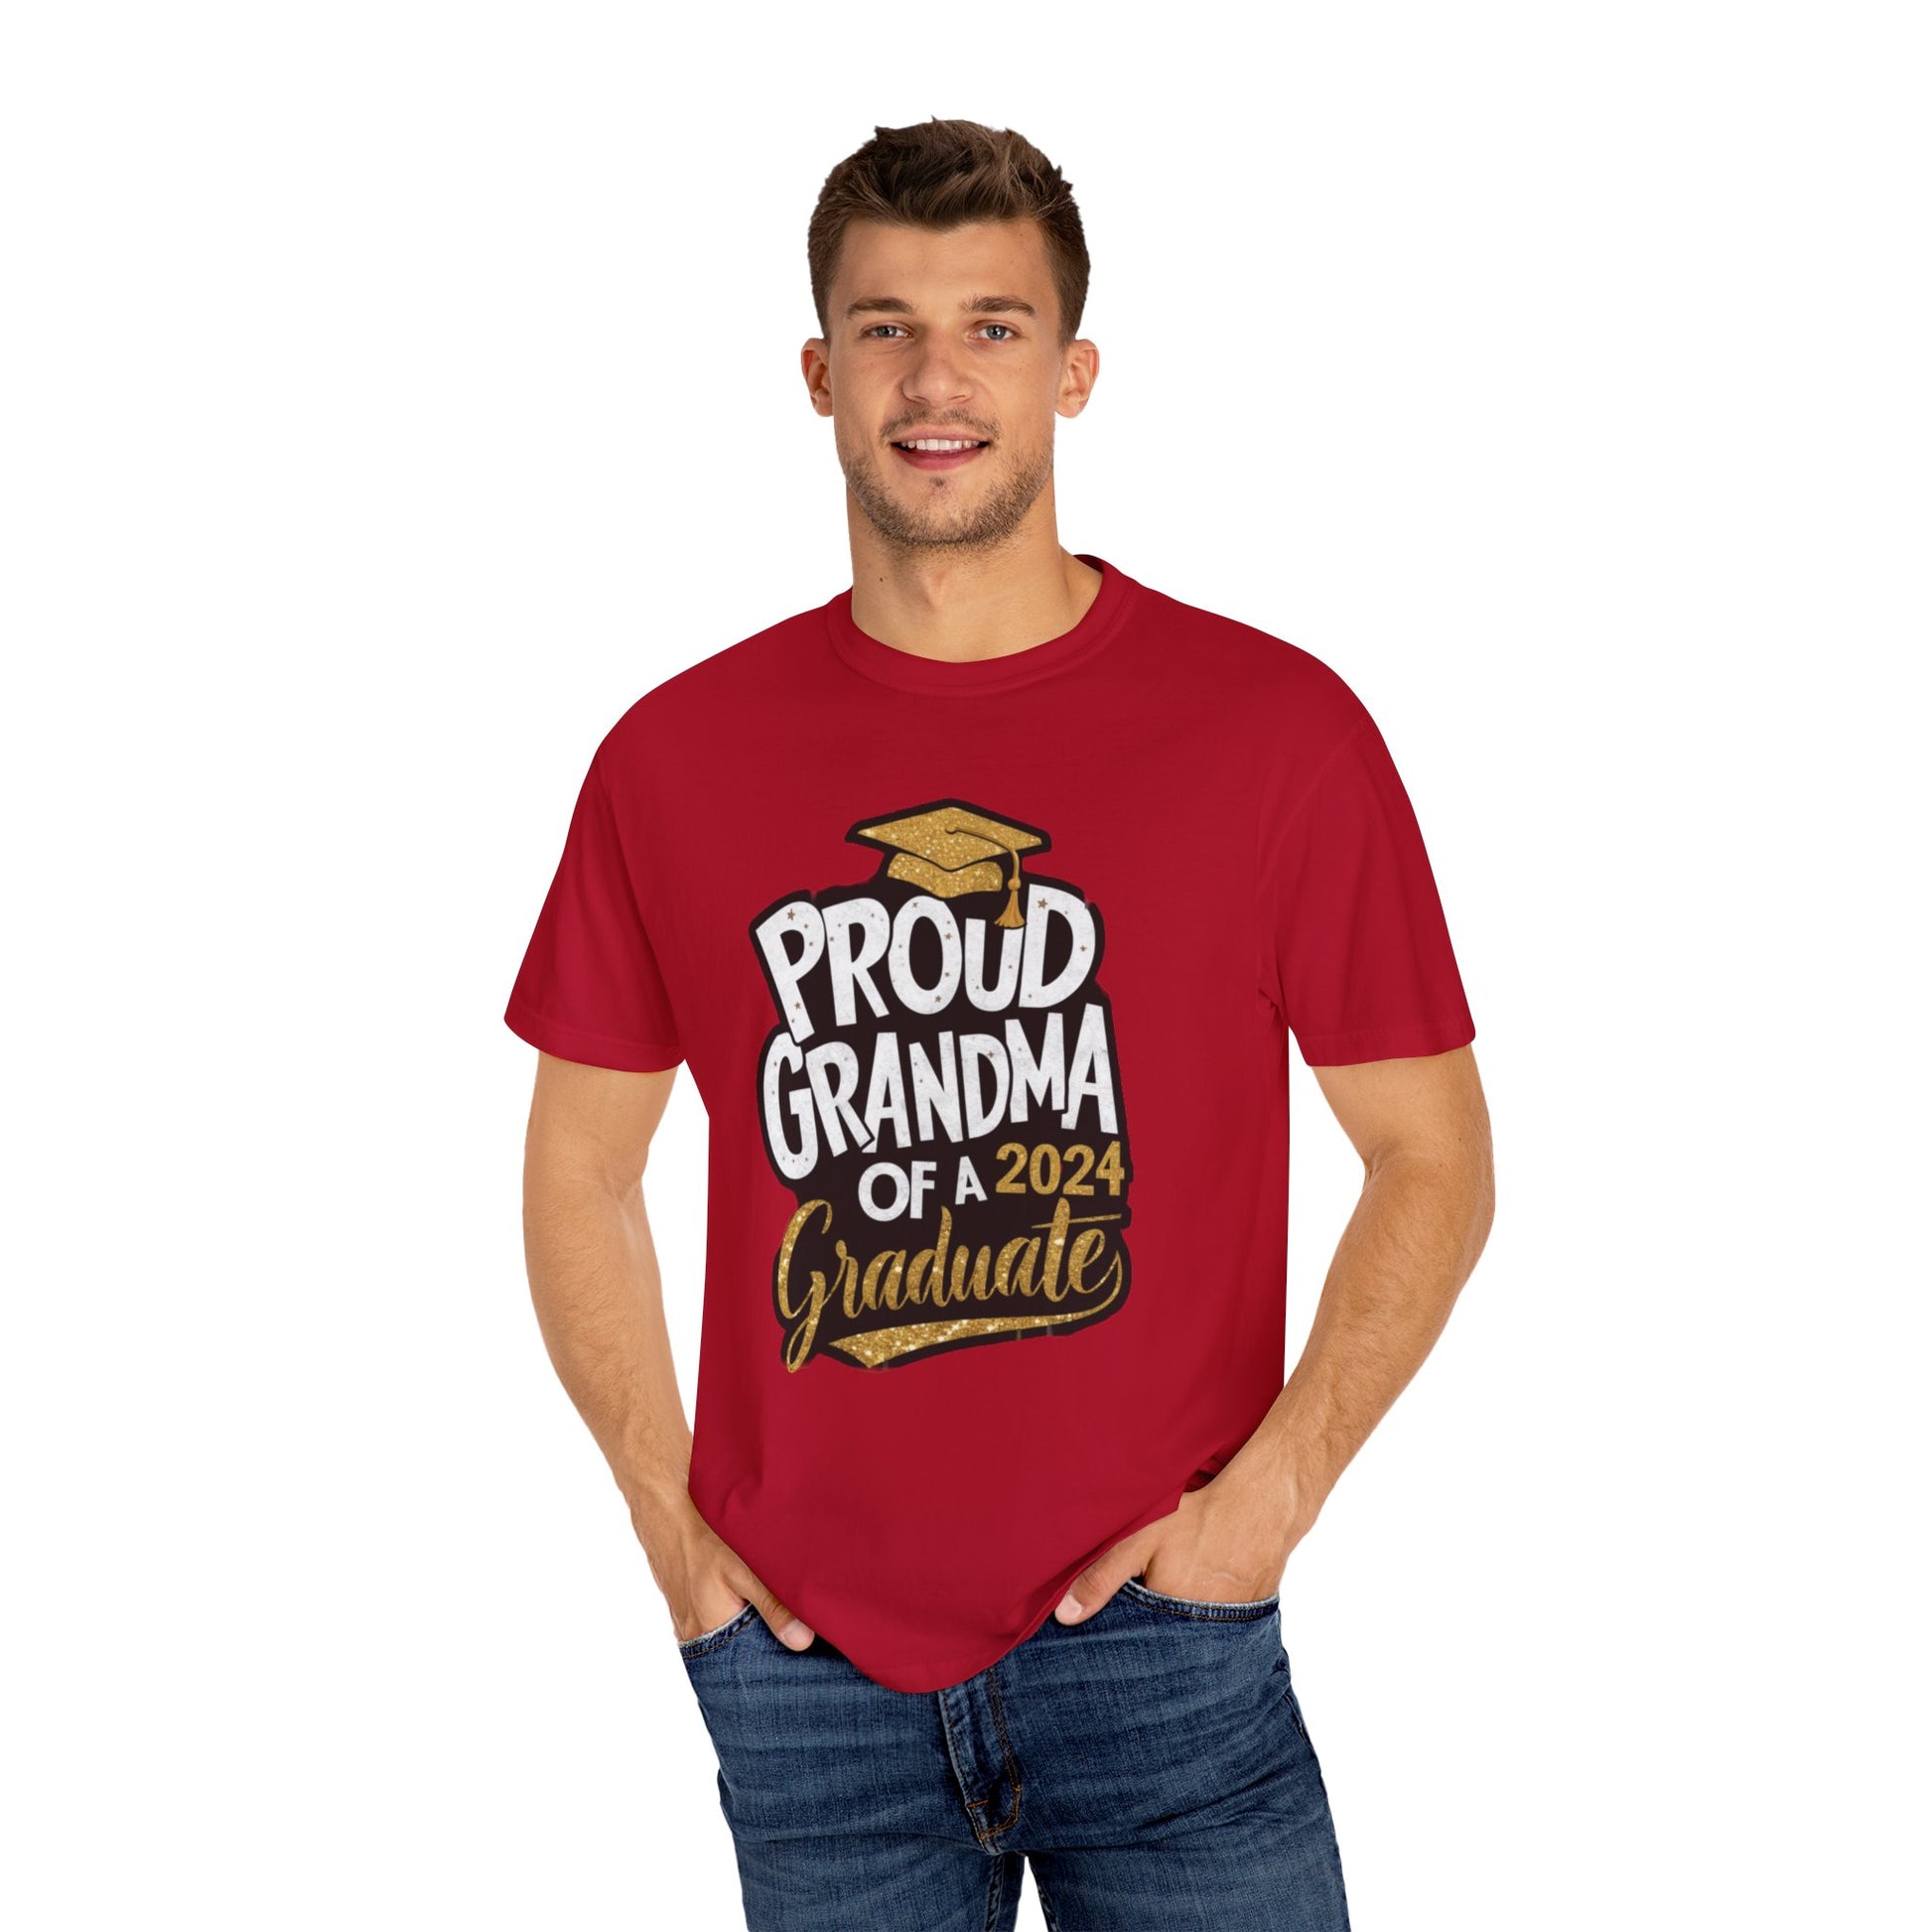 Proud of Grandma 2024 Graduate Unisex Garment-dyed T-shirt Cotton Funny Humorous Graphic Soft Premium Unisex Men Women Red T-shirt Birthday Gift-21